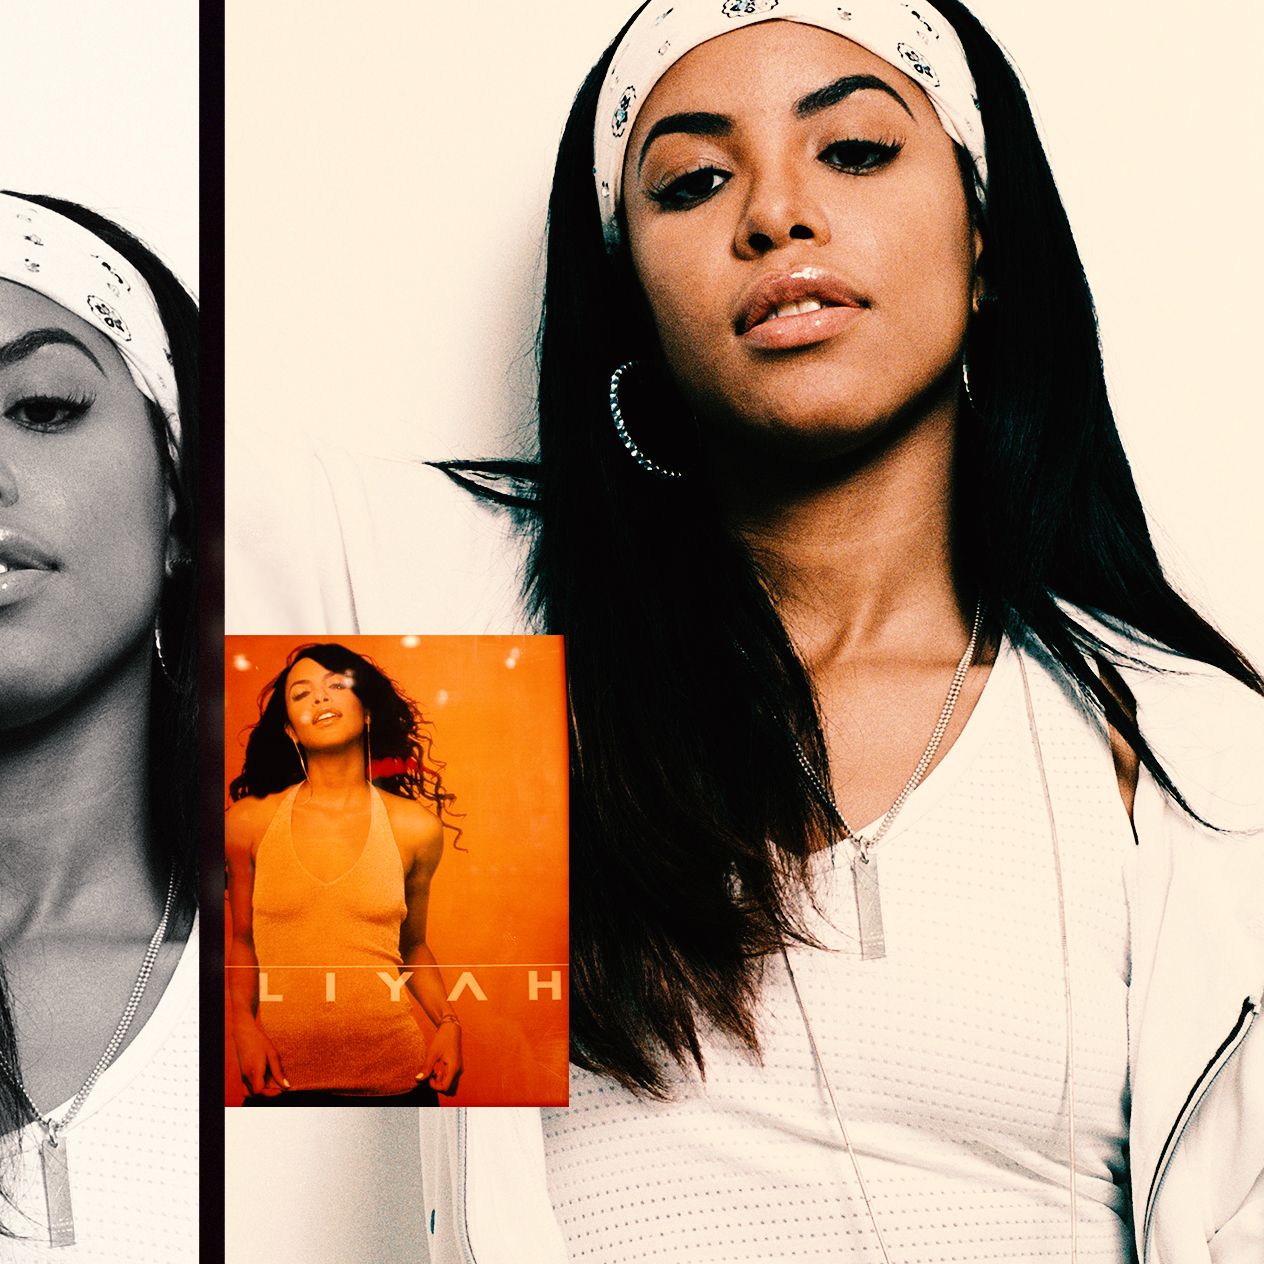 Leave Aaliyah's Music Alone